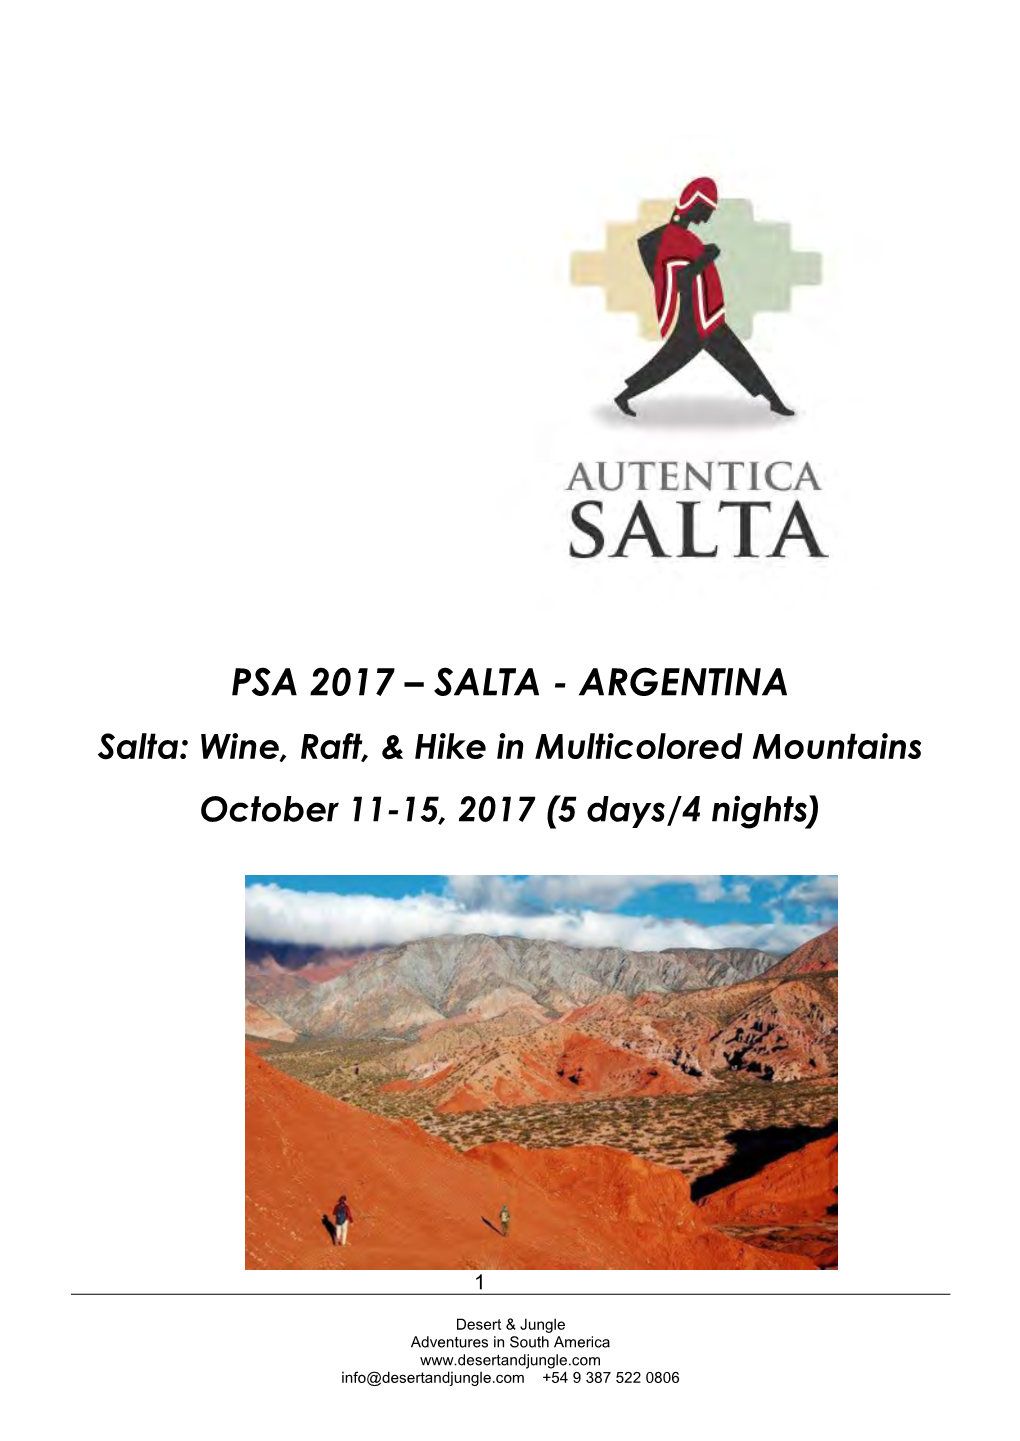 SALTA - ARGENTINA Salta: Wine, Raft, & Hike in Multicolored Mountains October 11-15, 2017 (5 Days/4 Nights)